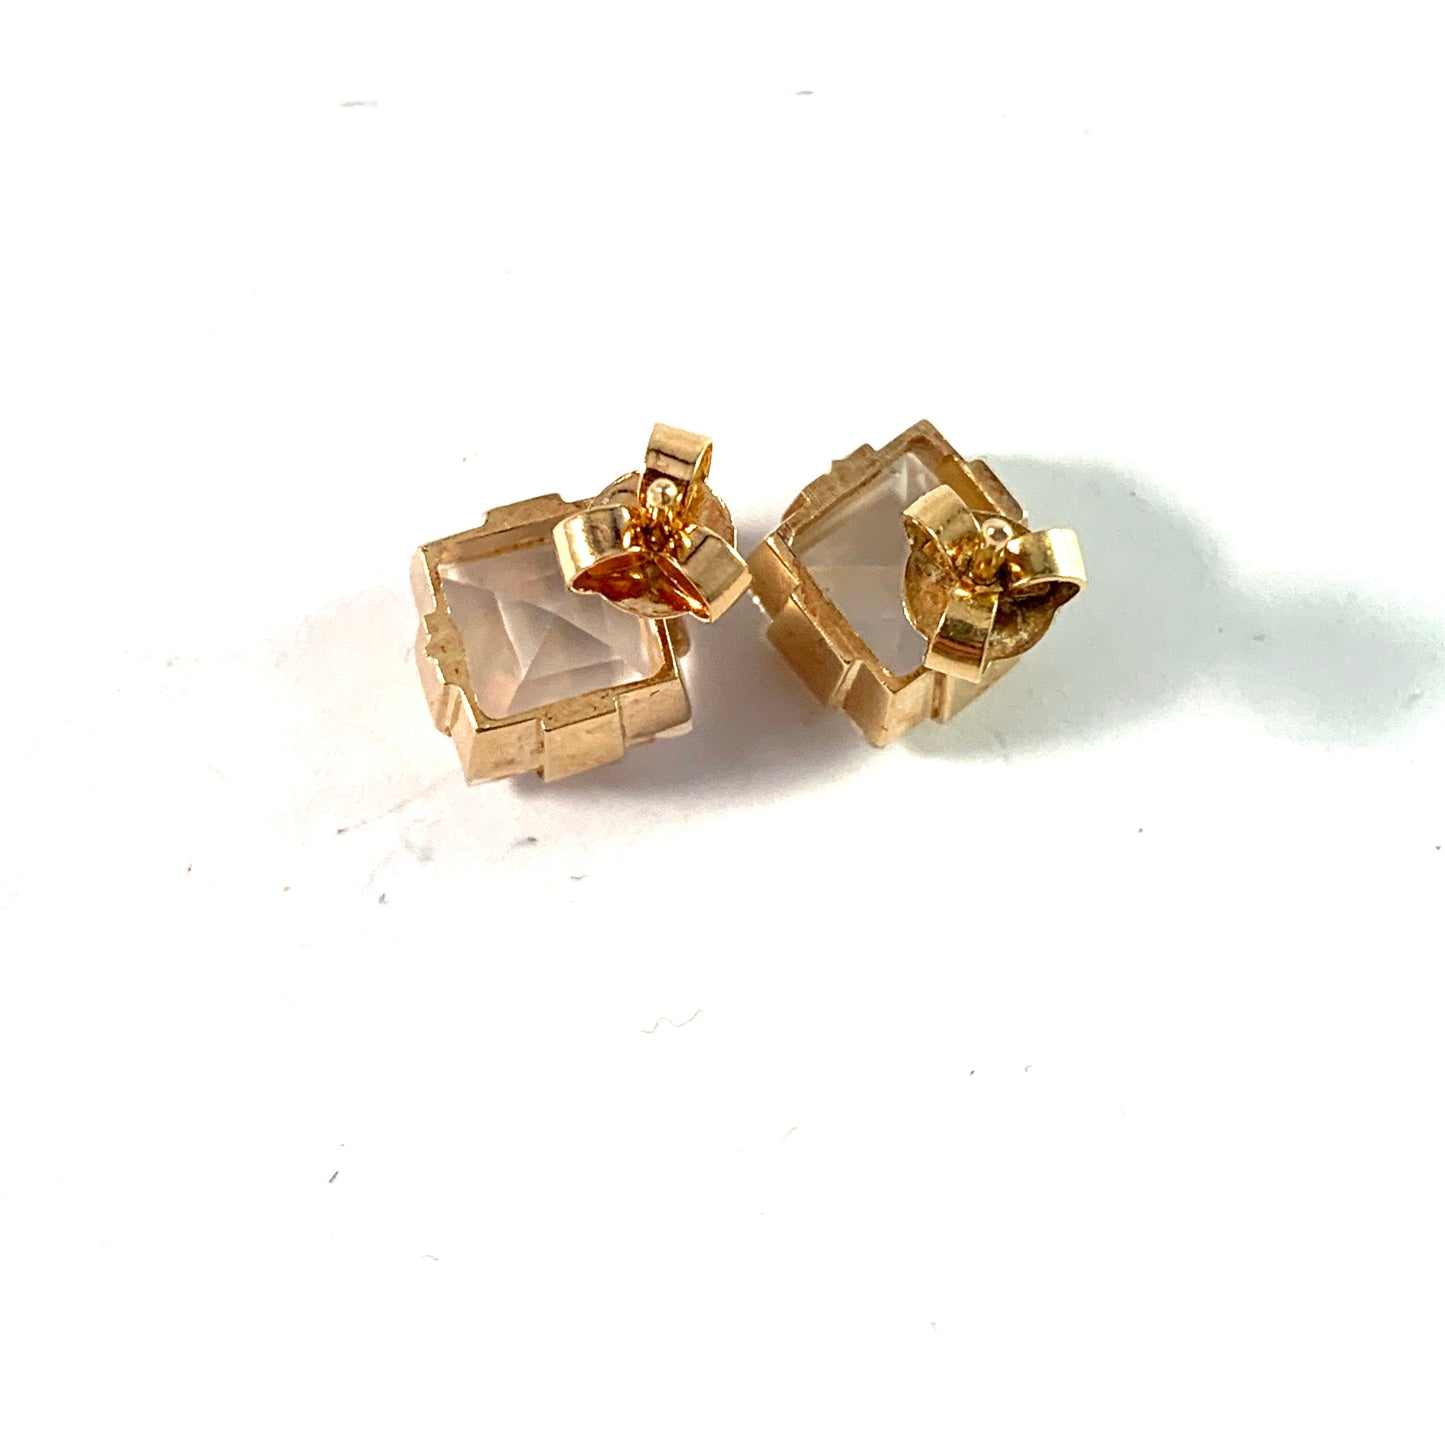 Ateljé Stigbert, Sweden 1950s. Vintage 18k Gold Rock Crystal Earrings.